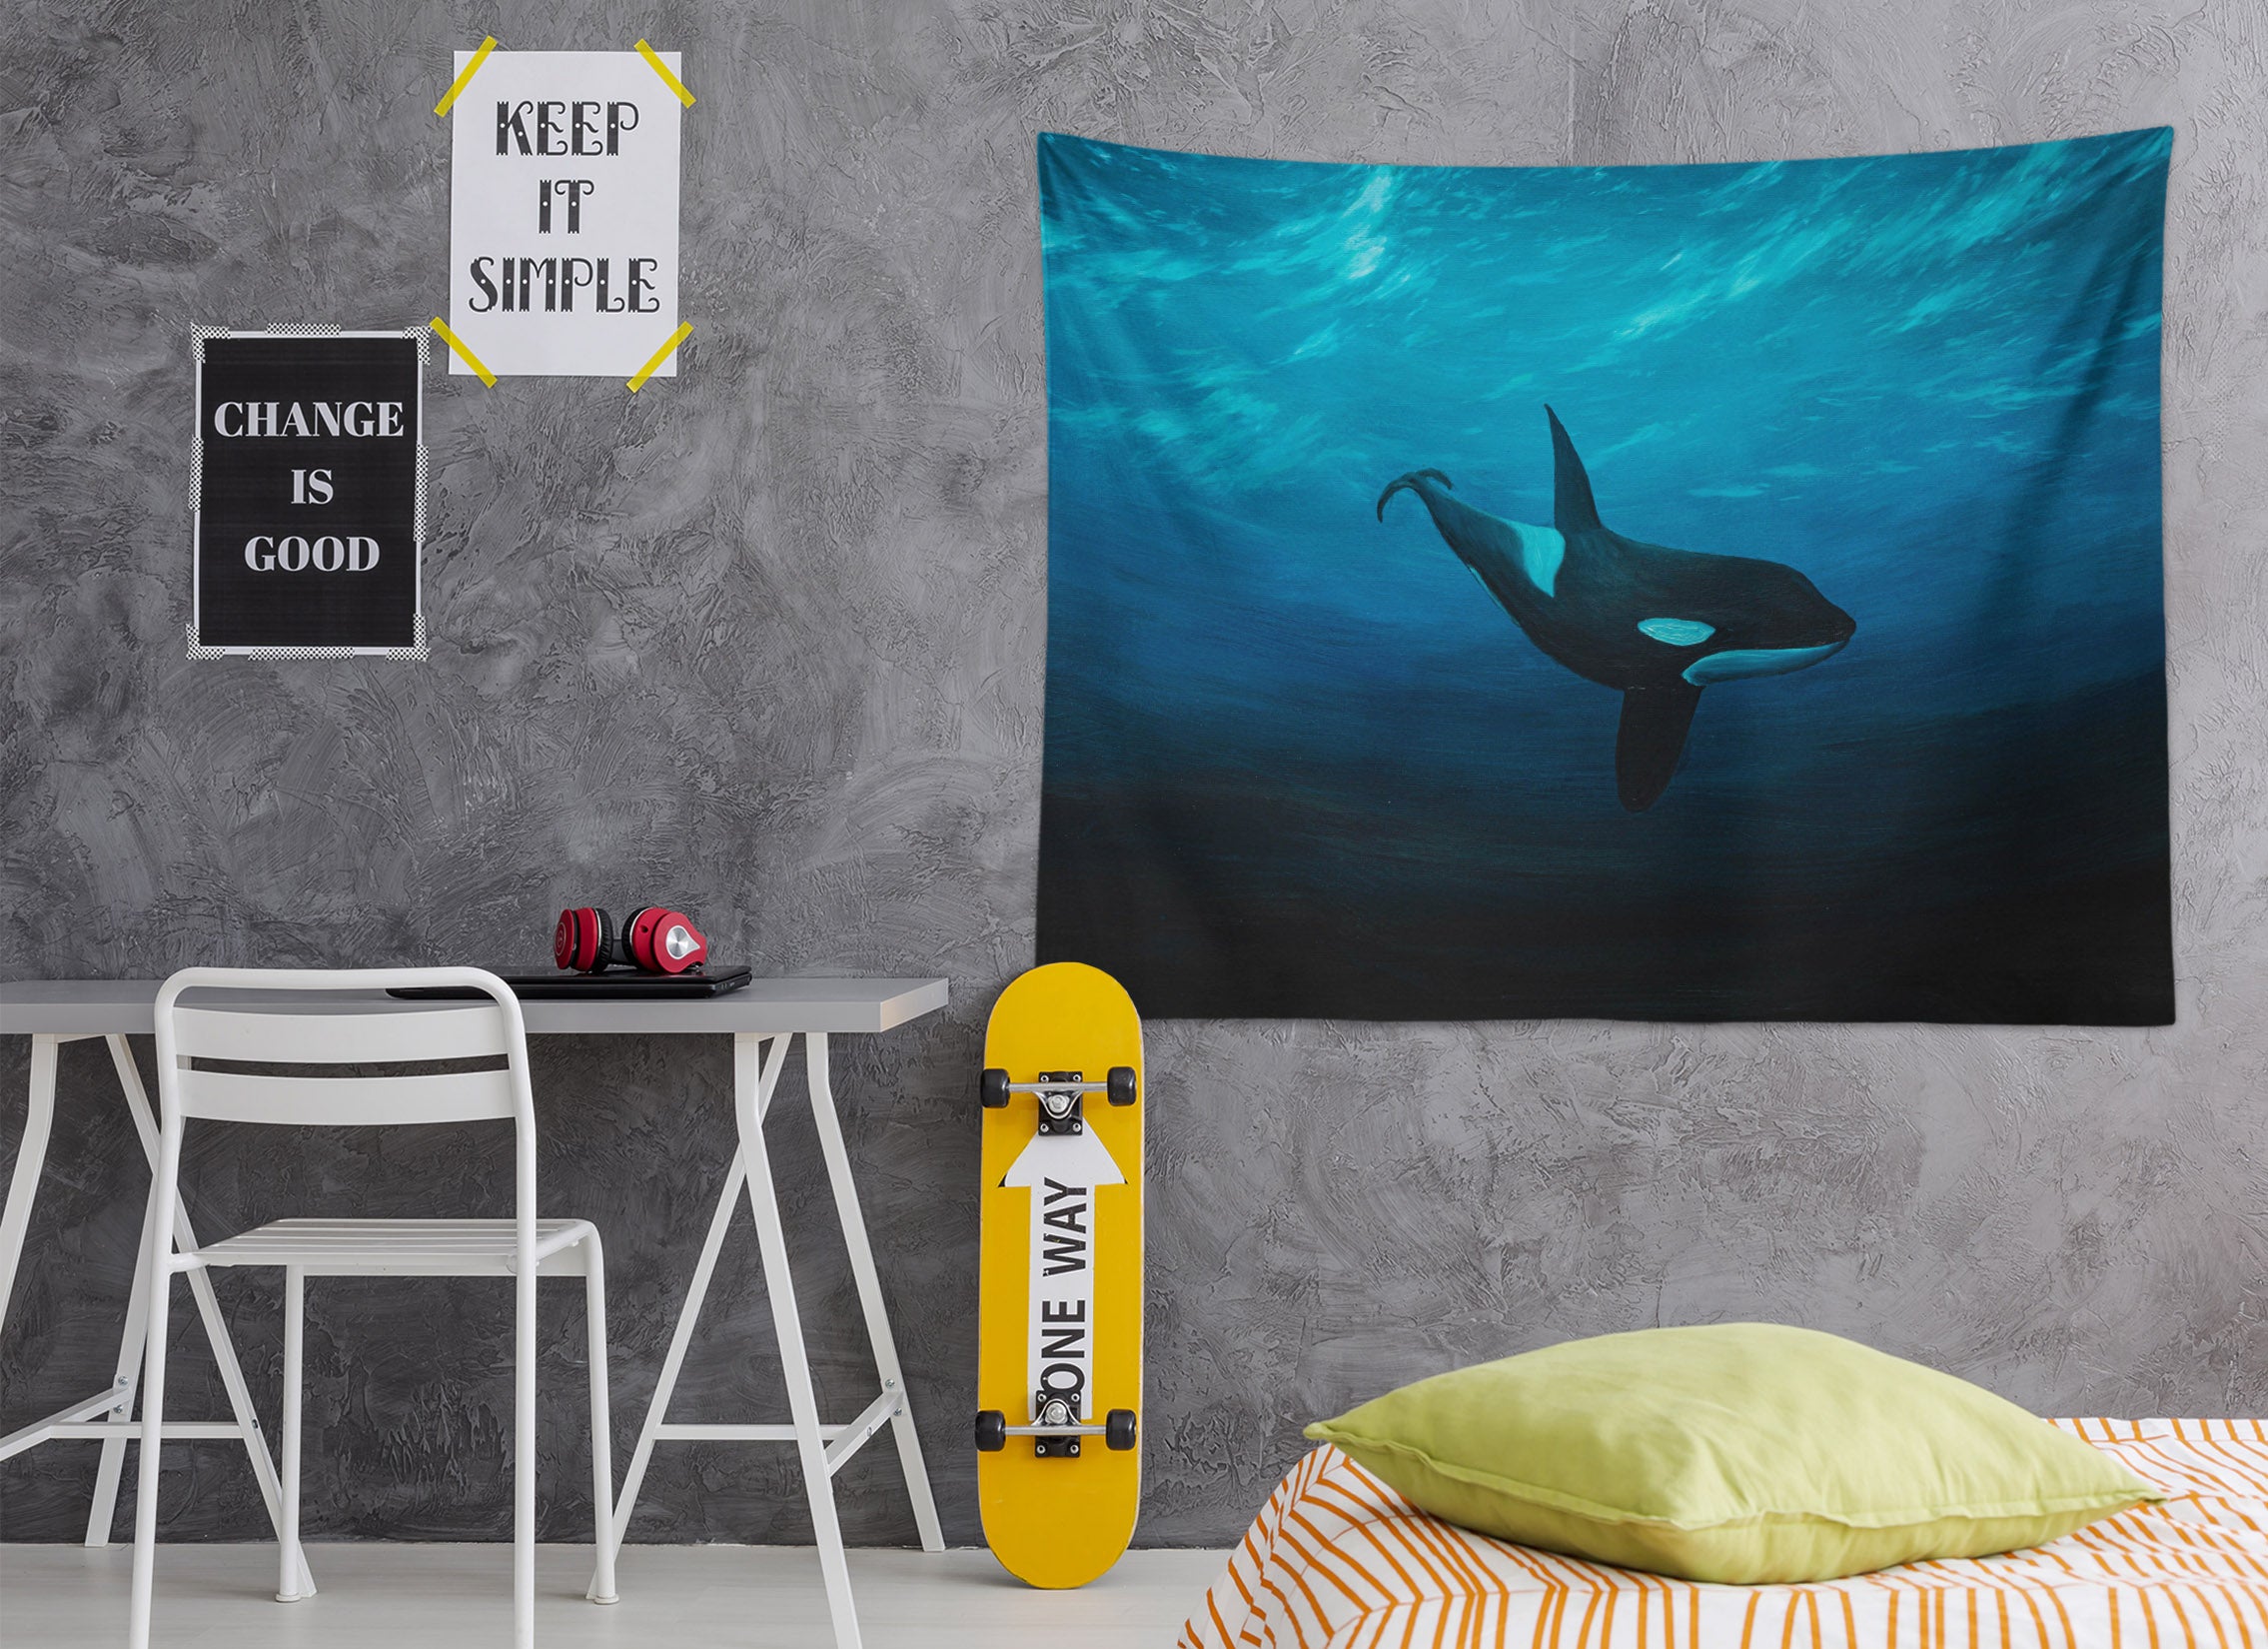 3D Underwater Whale 870 Marina Zotova Tapestry Hanging Cloth Hang